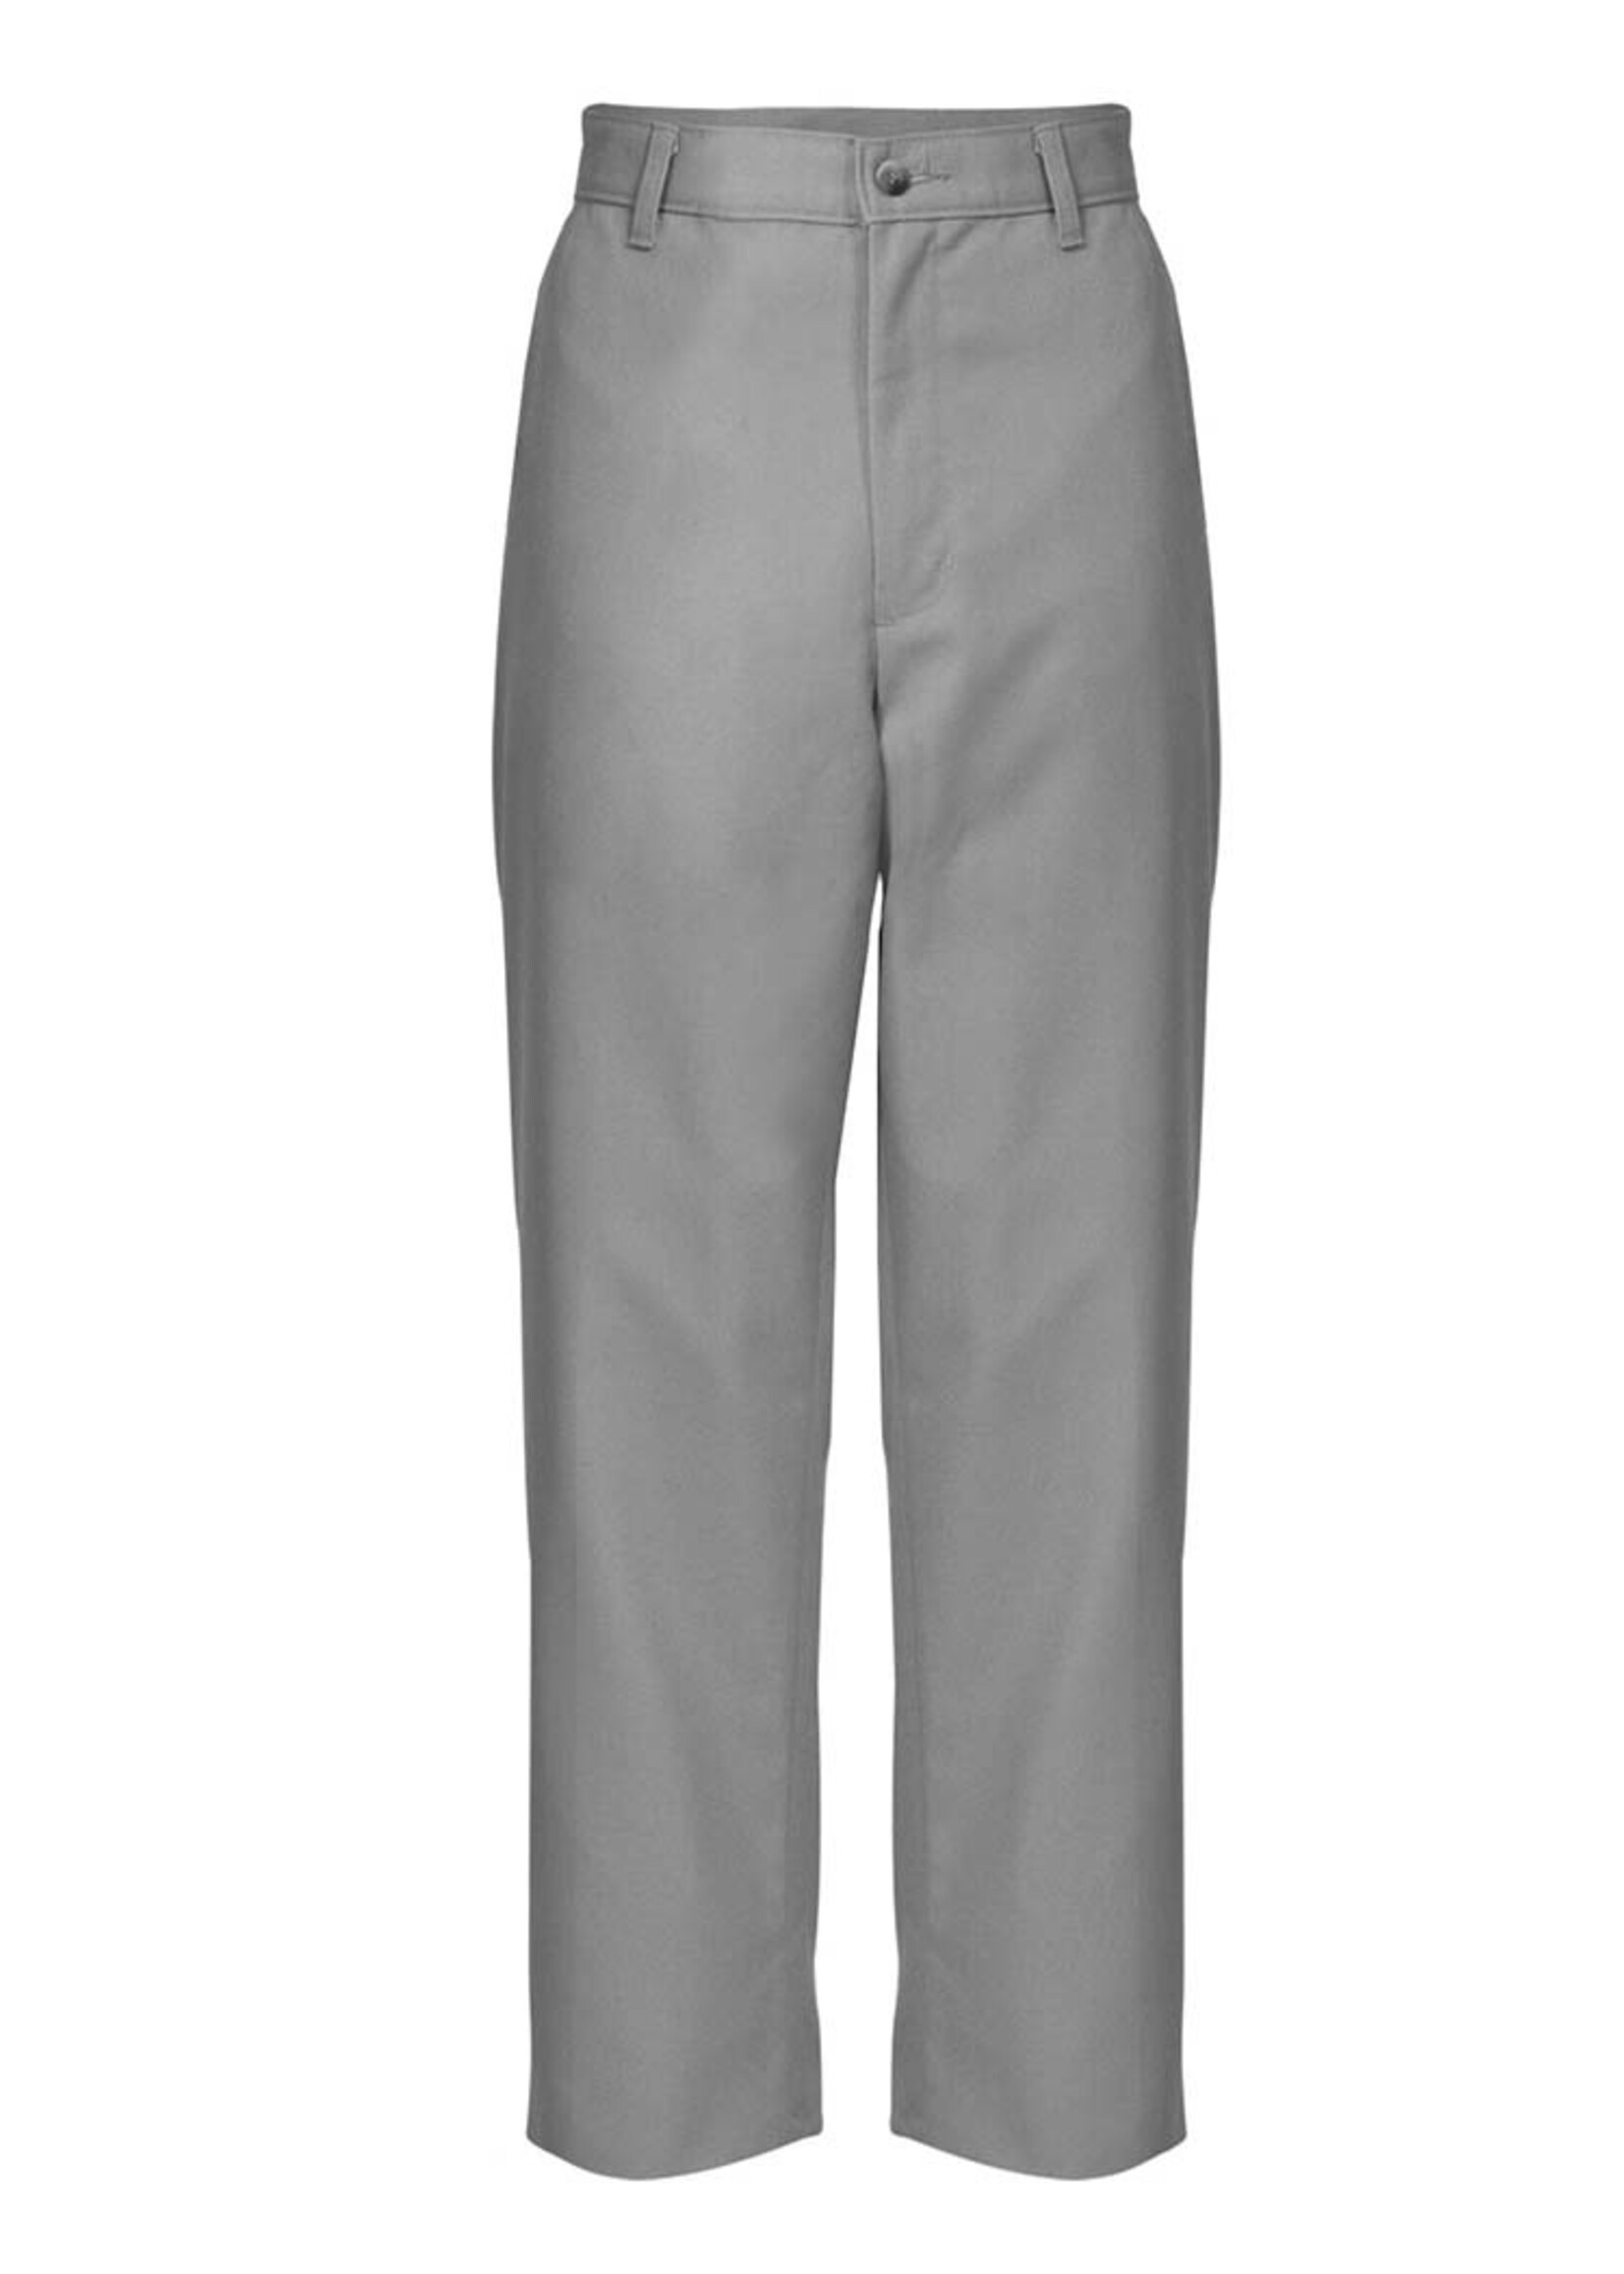 Slim Fit B-91 Formal Grey Textured Trouser - Beck